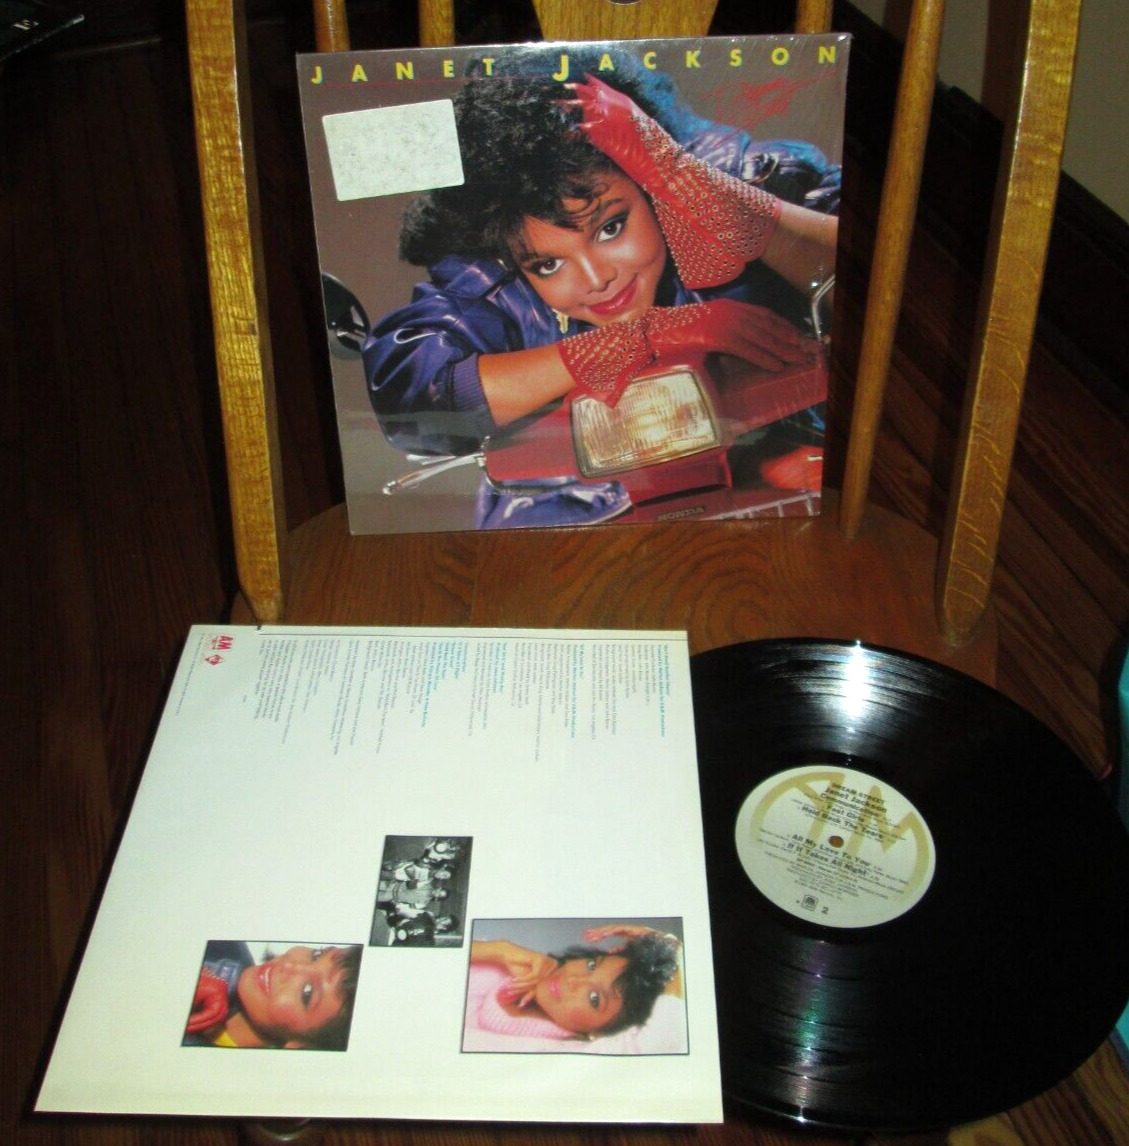 JANET JACKSON DREAM STREET LP NM US A&M 1984 VINYL SOUL SYNTH POP IN SHRINK